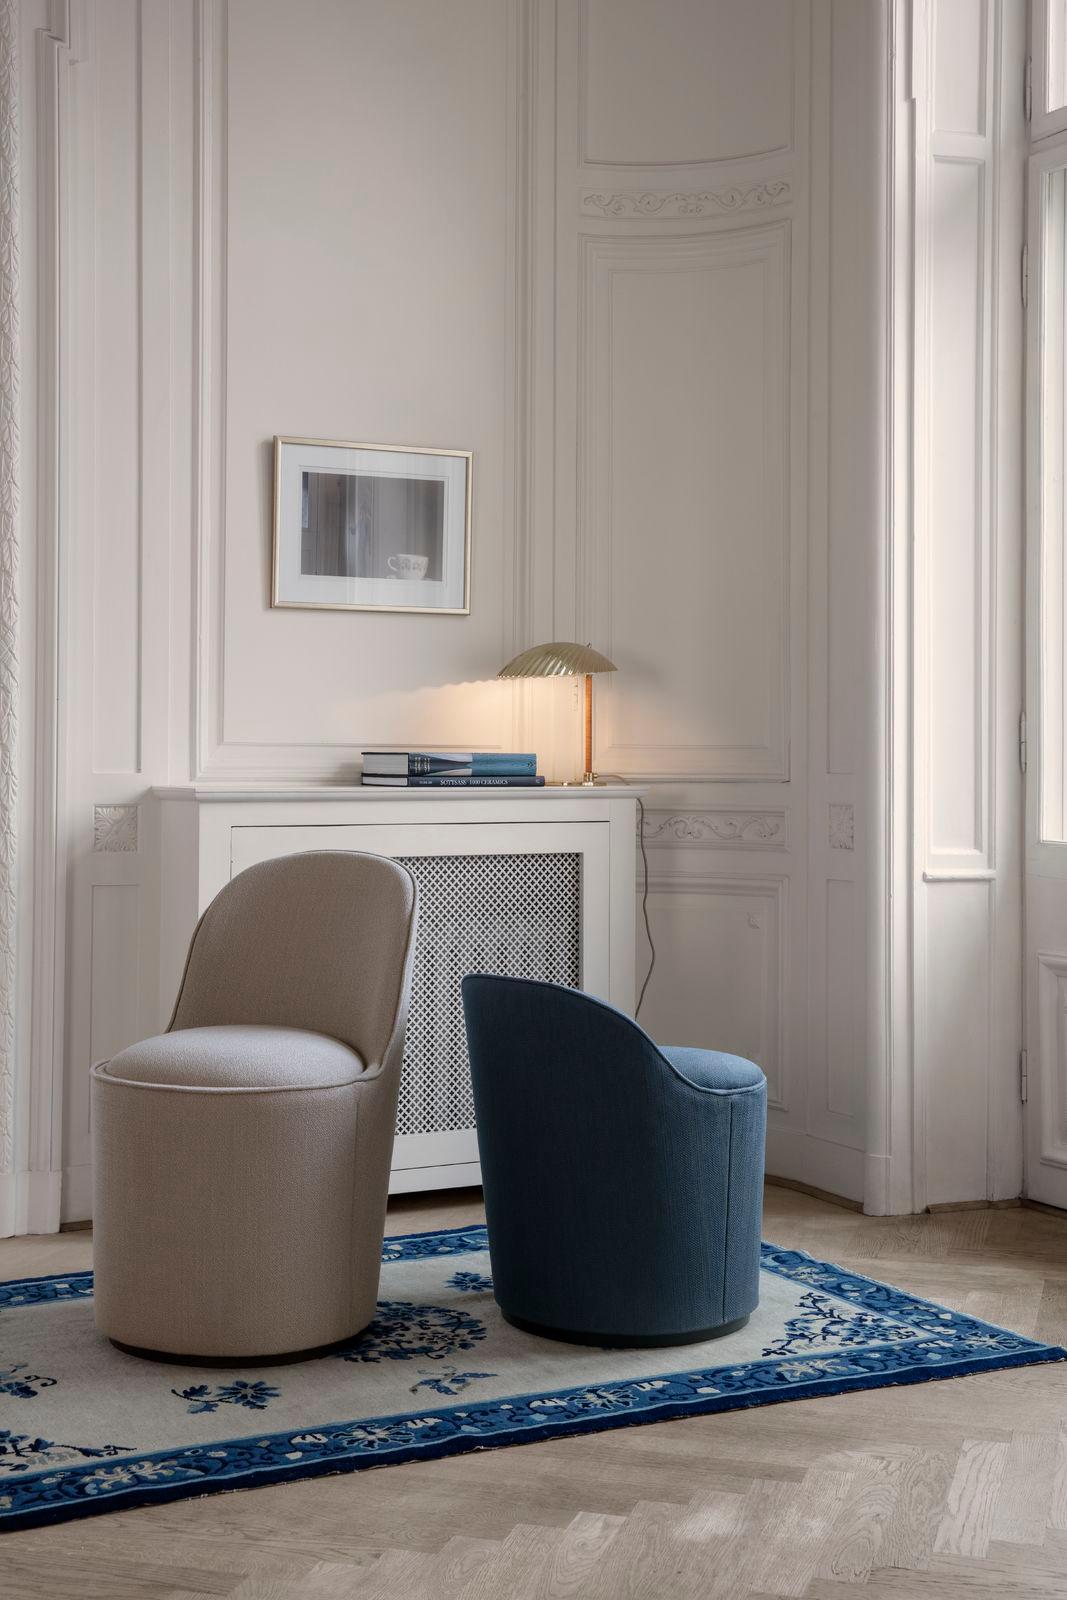 Danish Tail Low Back Modern Italian Style Chauffeuse Lounge Chairs